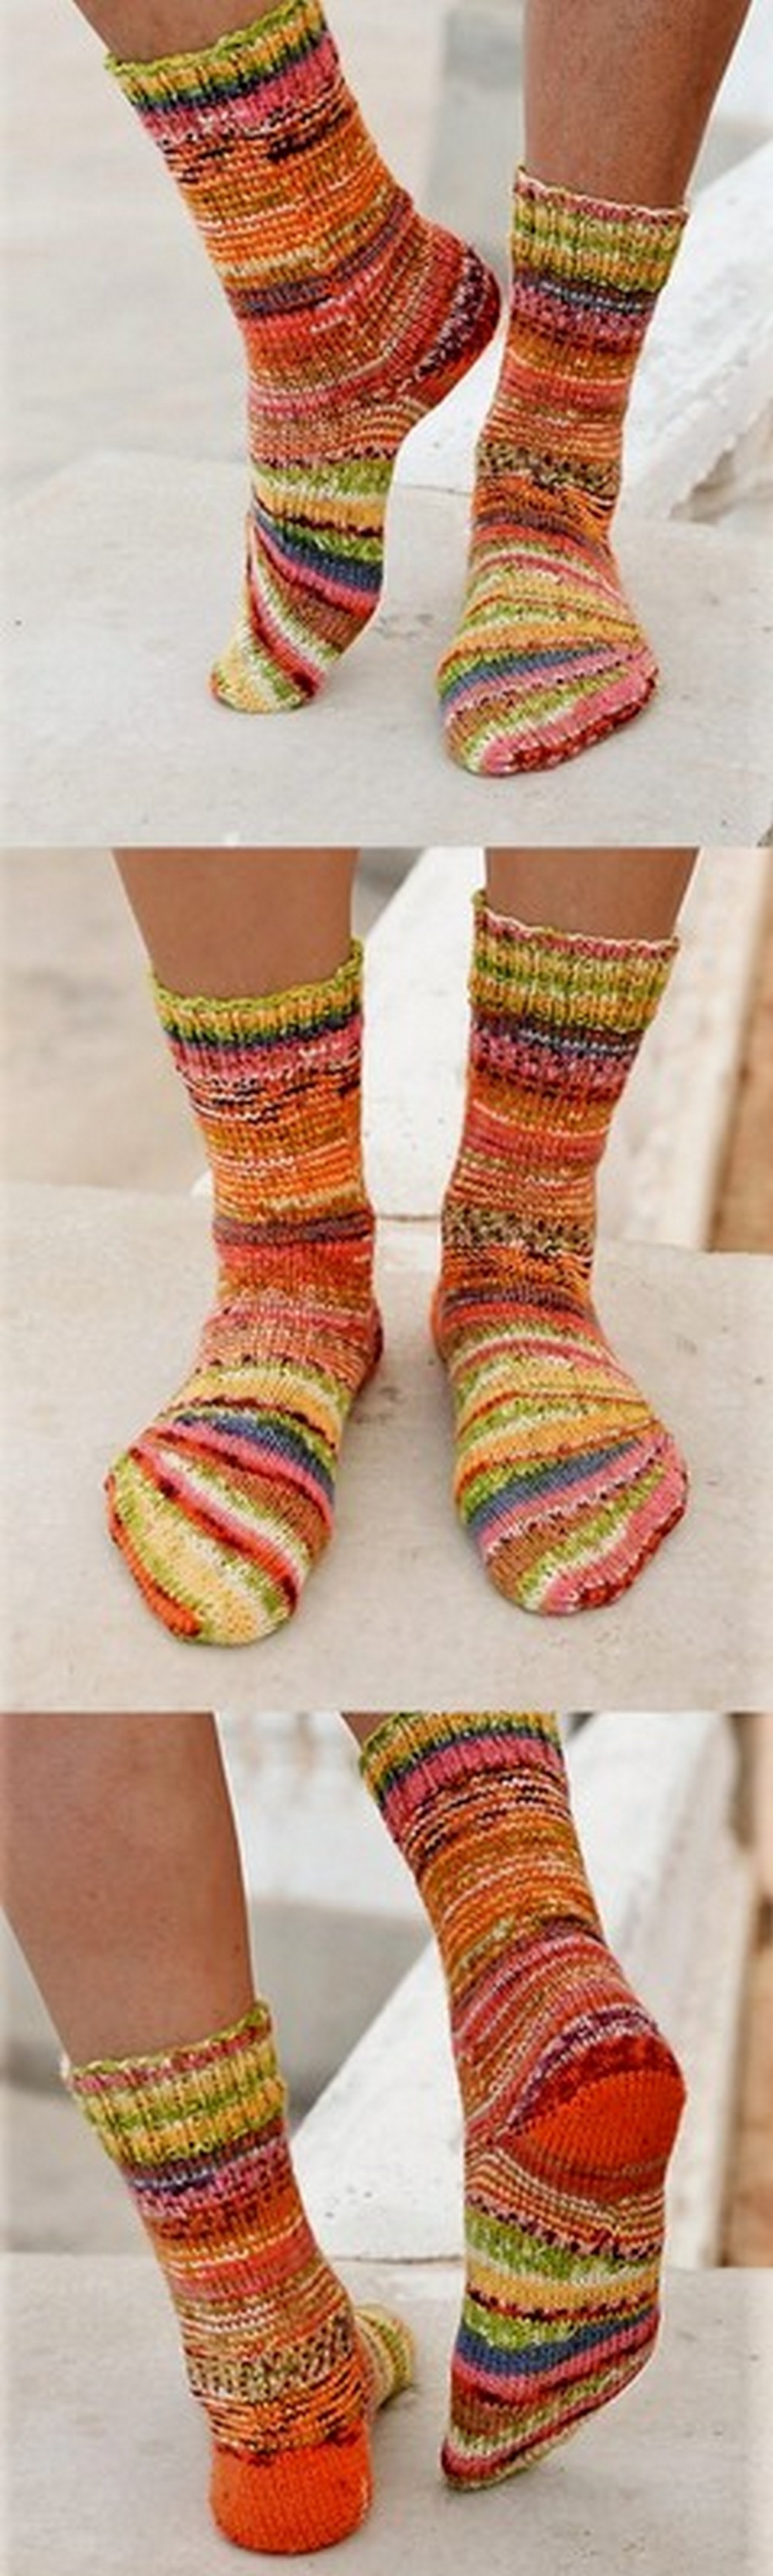 Crochet Country Fair Socks